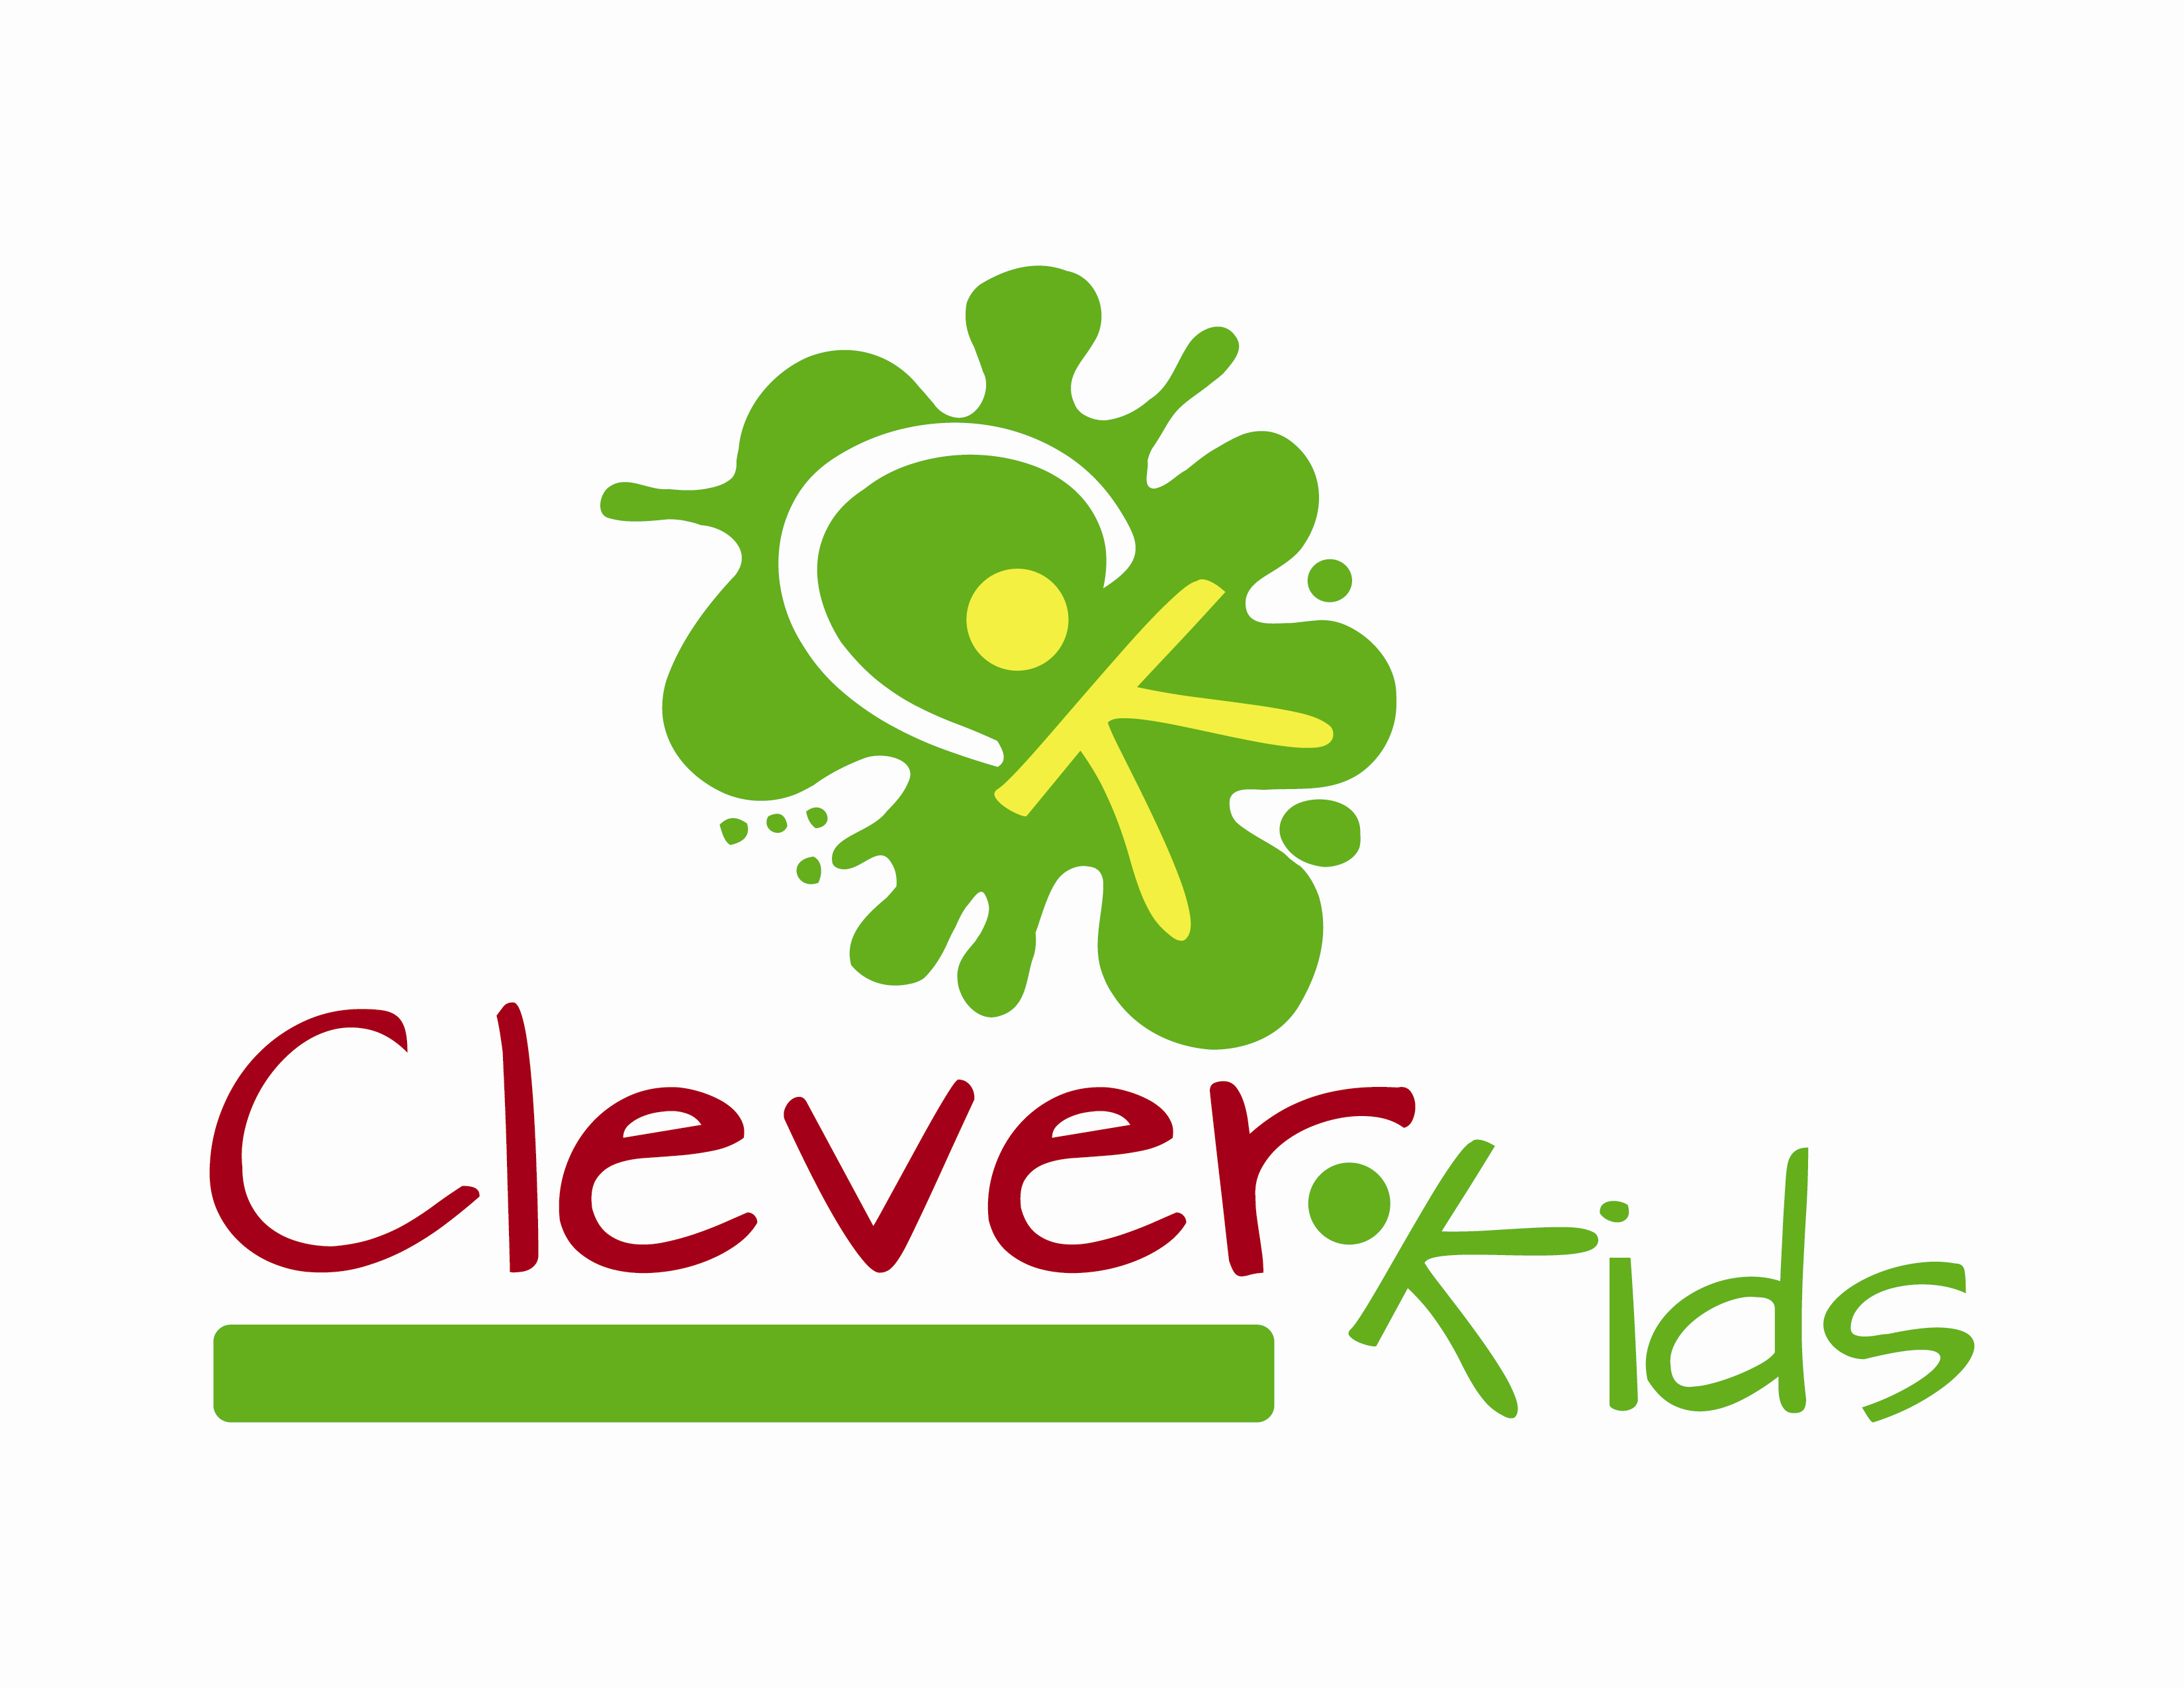 Издательство клевер сайт. Клевер. Клевер логотип. Clever логотип одежда. Клевер детская одежда логотип.